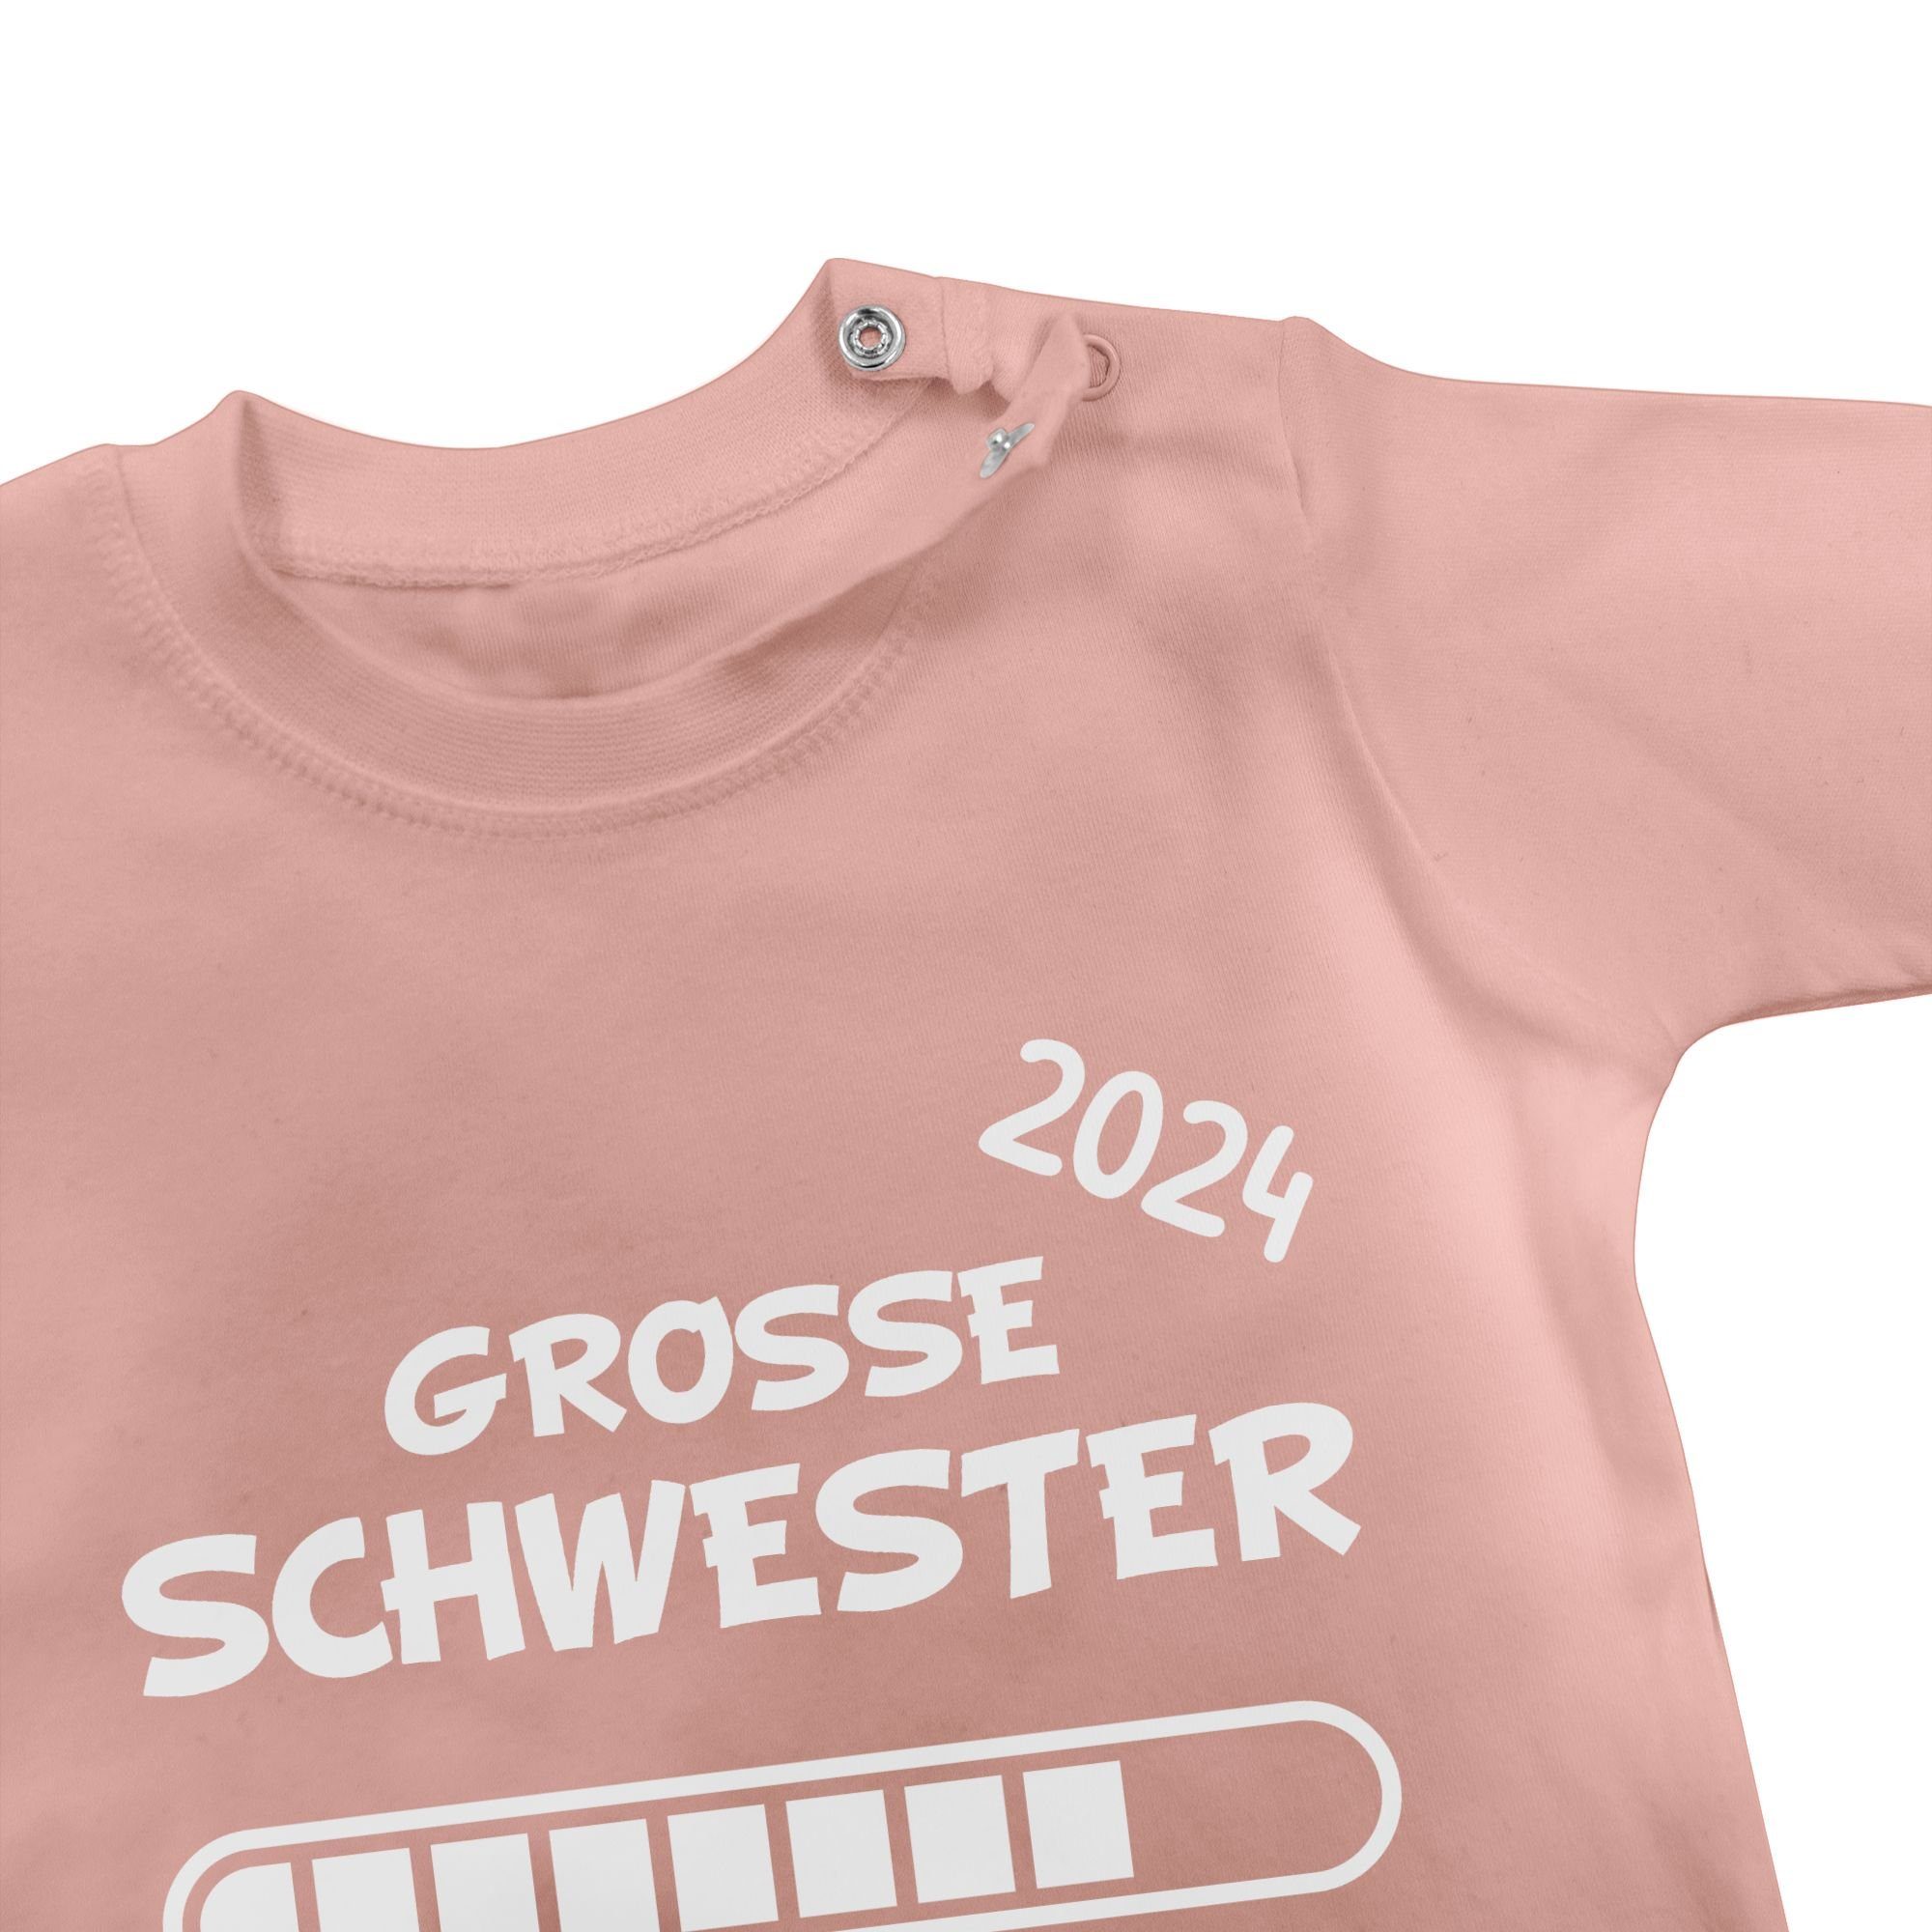 2024 Babyrosa 1 Bruder Schwester und Große Schwester loading Shirtracer Geschwister T-Shirt